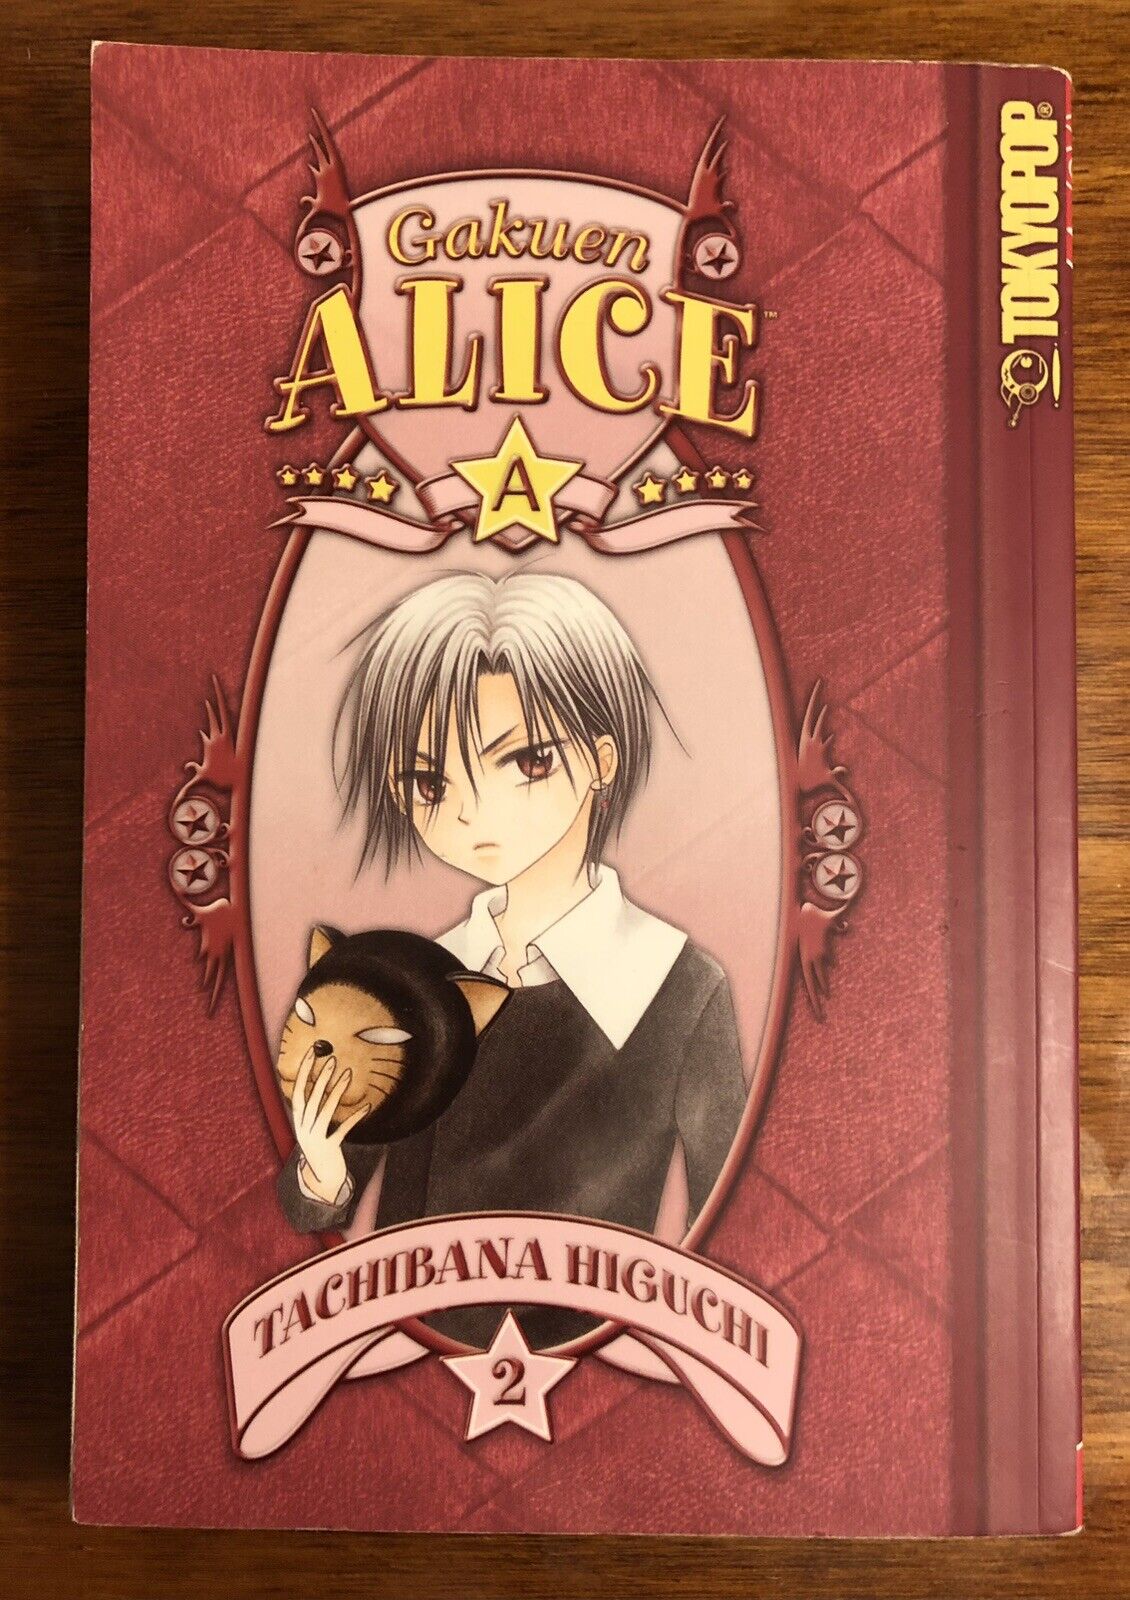 Gakuen Alice Volume 2 english manga by Tachibana Higuchi, out of print